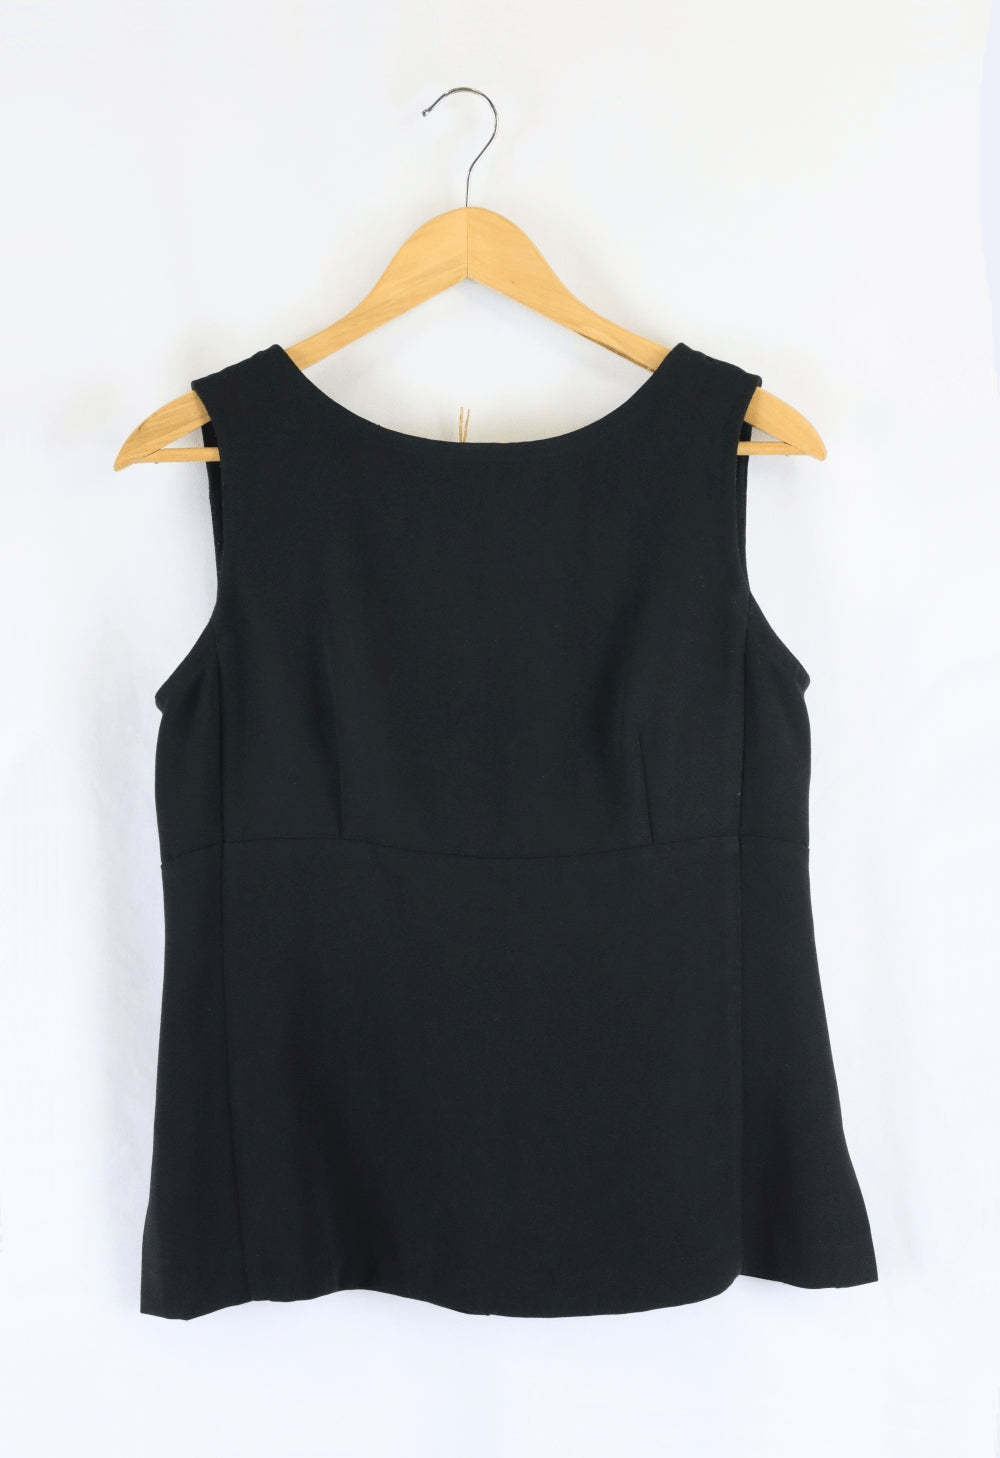 Rockwear Black Singlet 12 - Reluv Clothing Australia